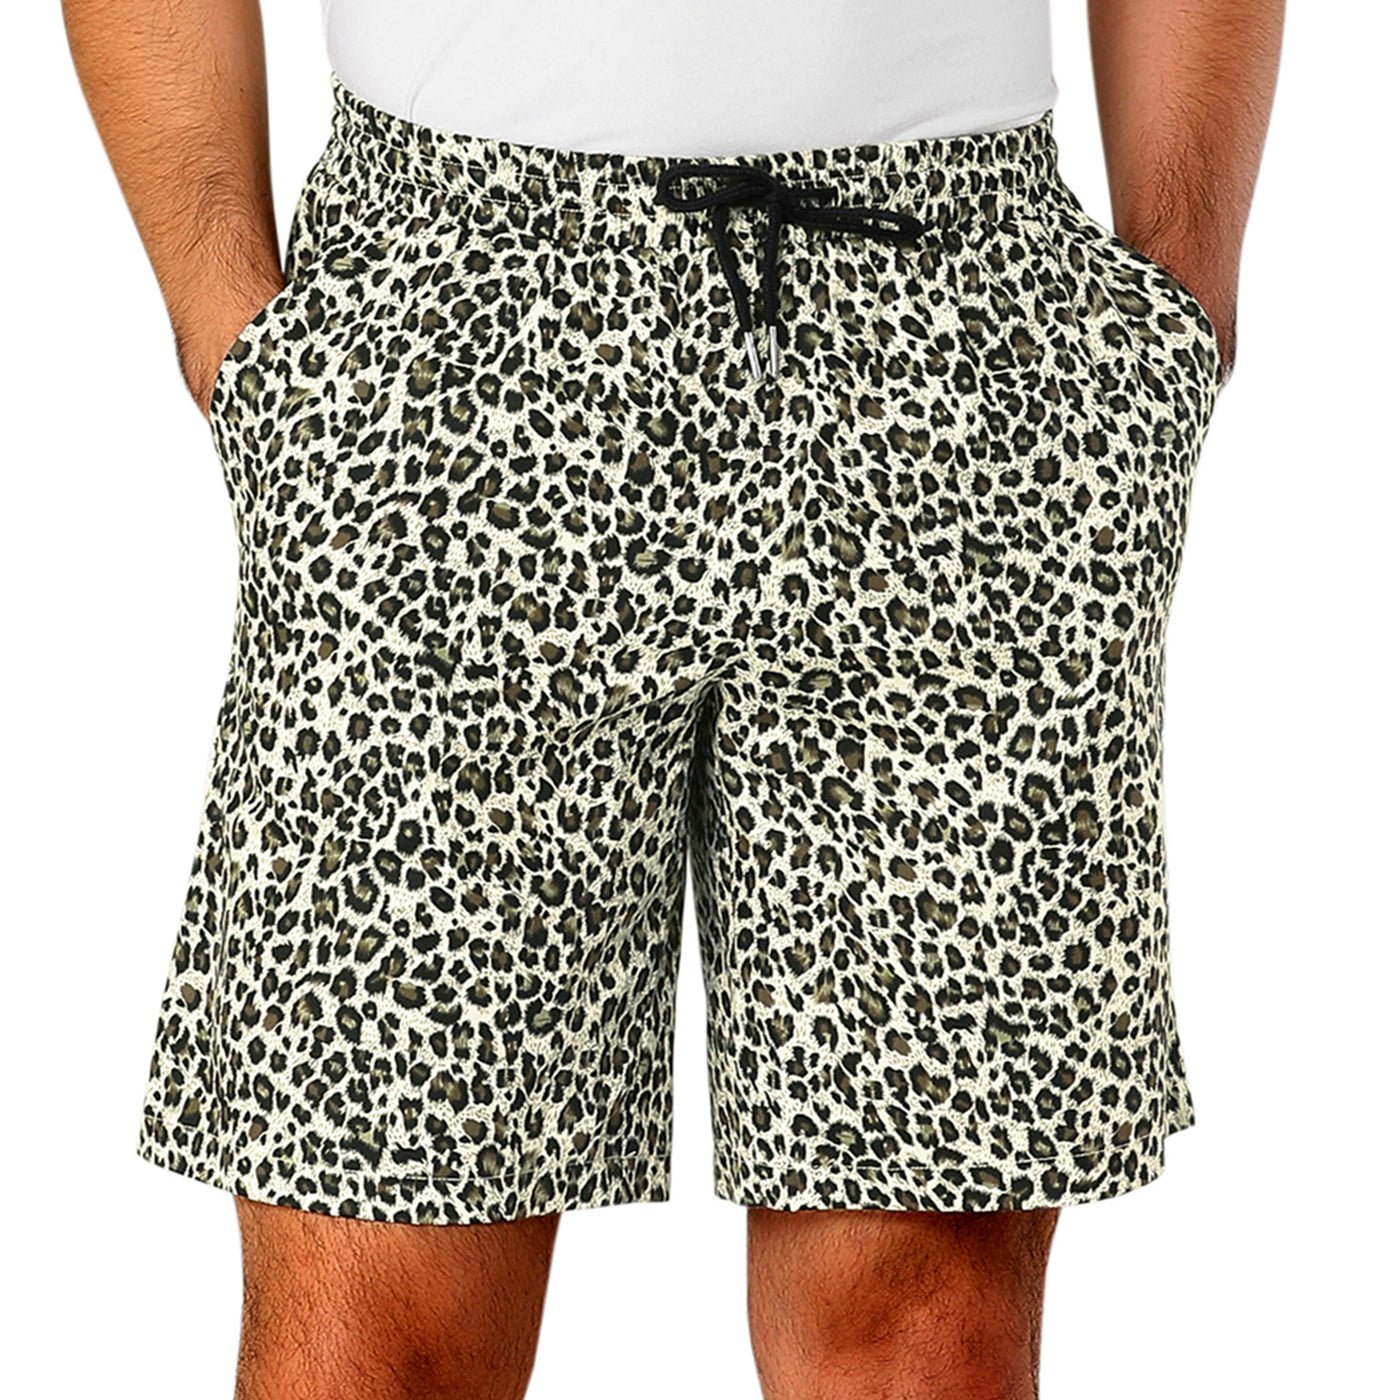 Bublédon Casual Cotton Leopard Printed Elastic Board Shorts